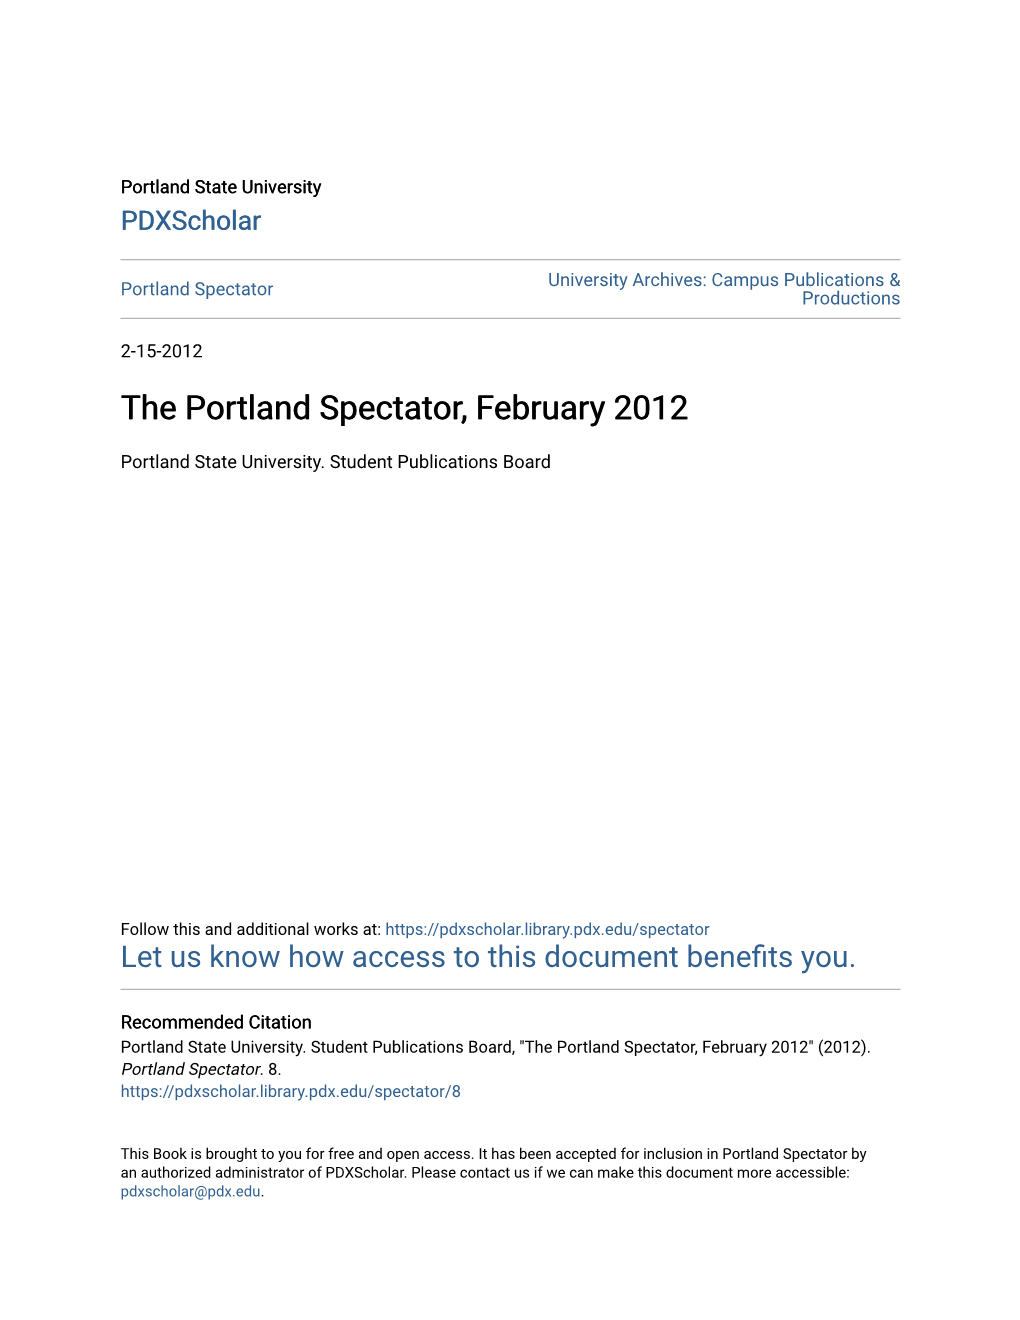 The Portland Spectator, February 2012